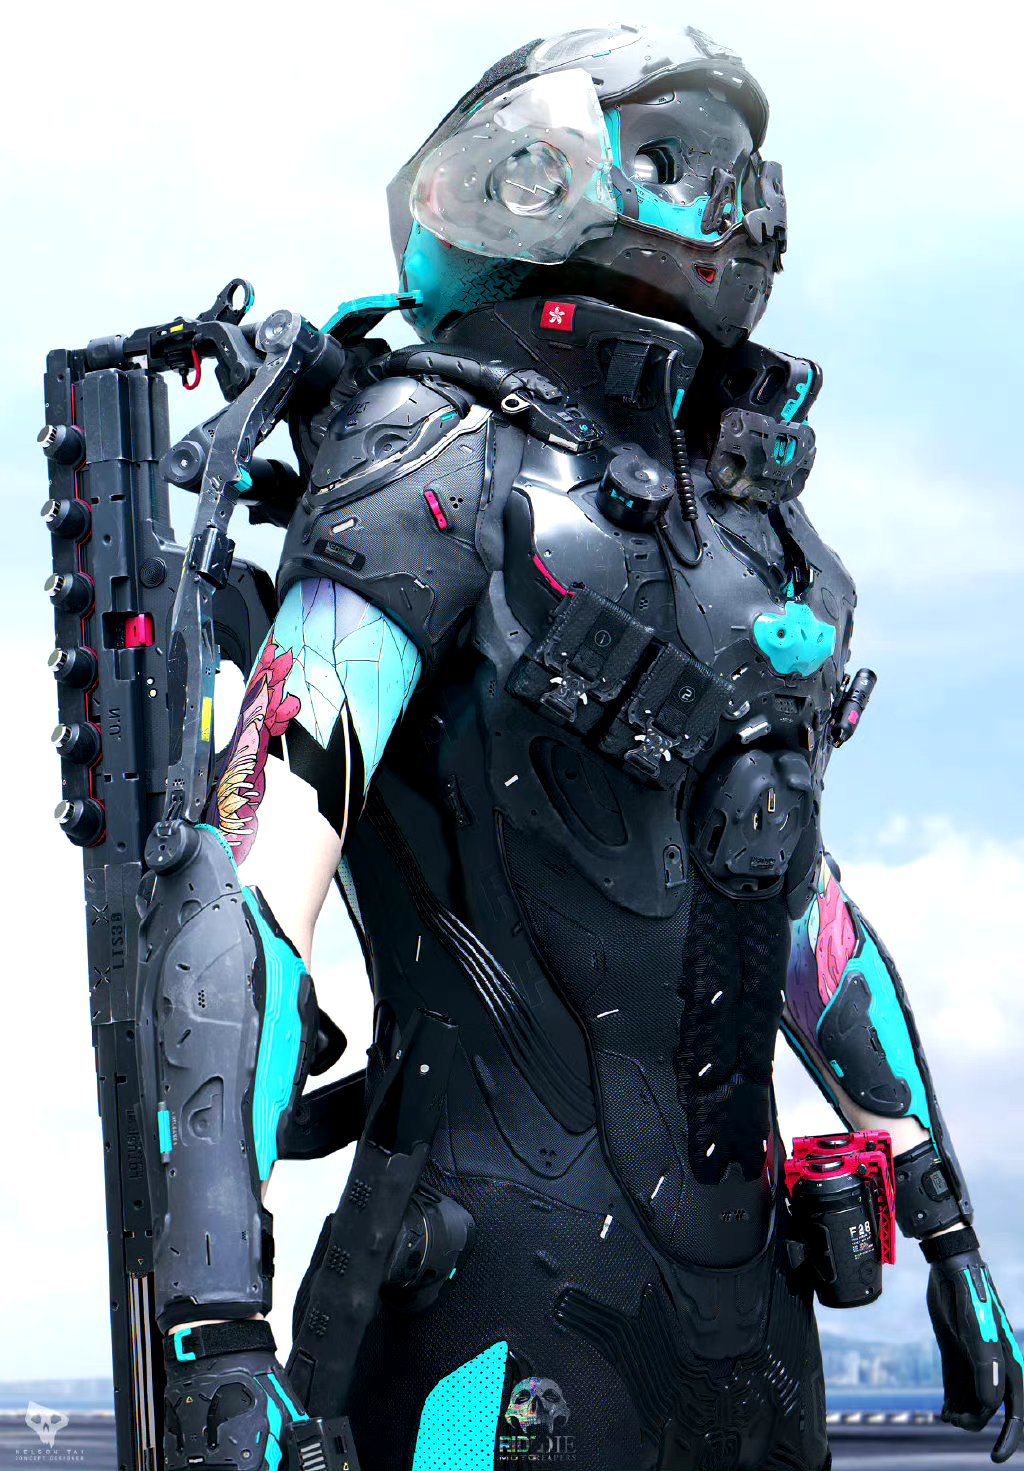 nelson tai外骨骼盔甲与武器设计插画欣赏,很是炫酷,充满了赛博朋克的